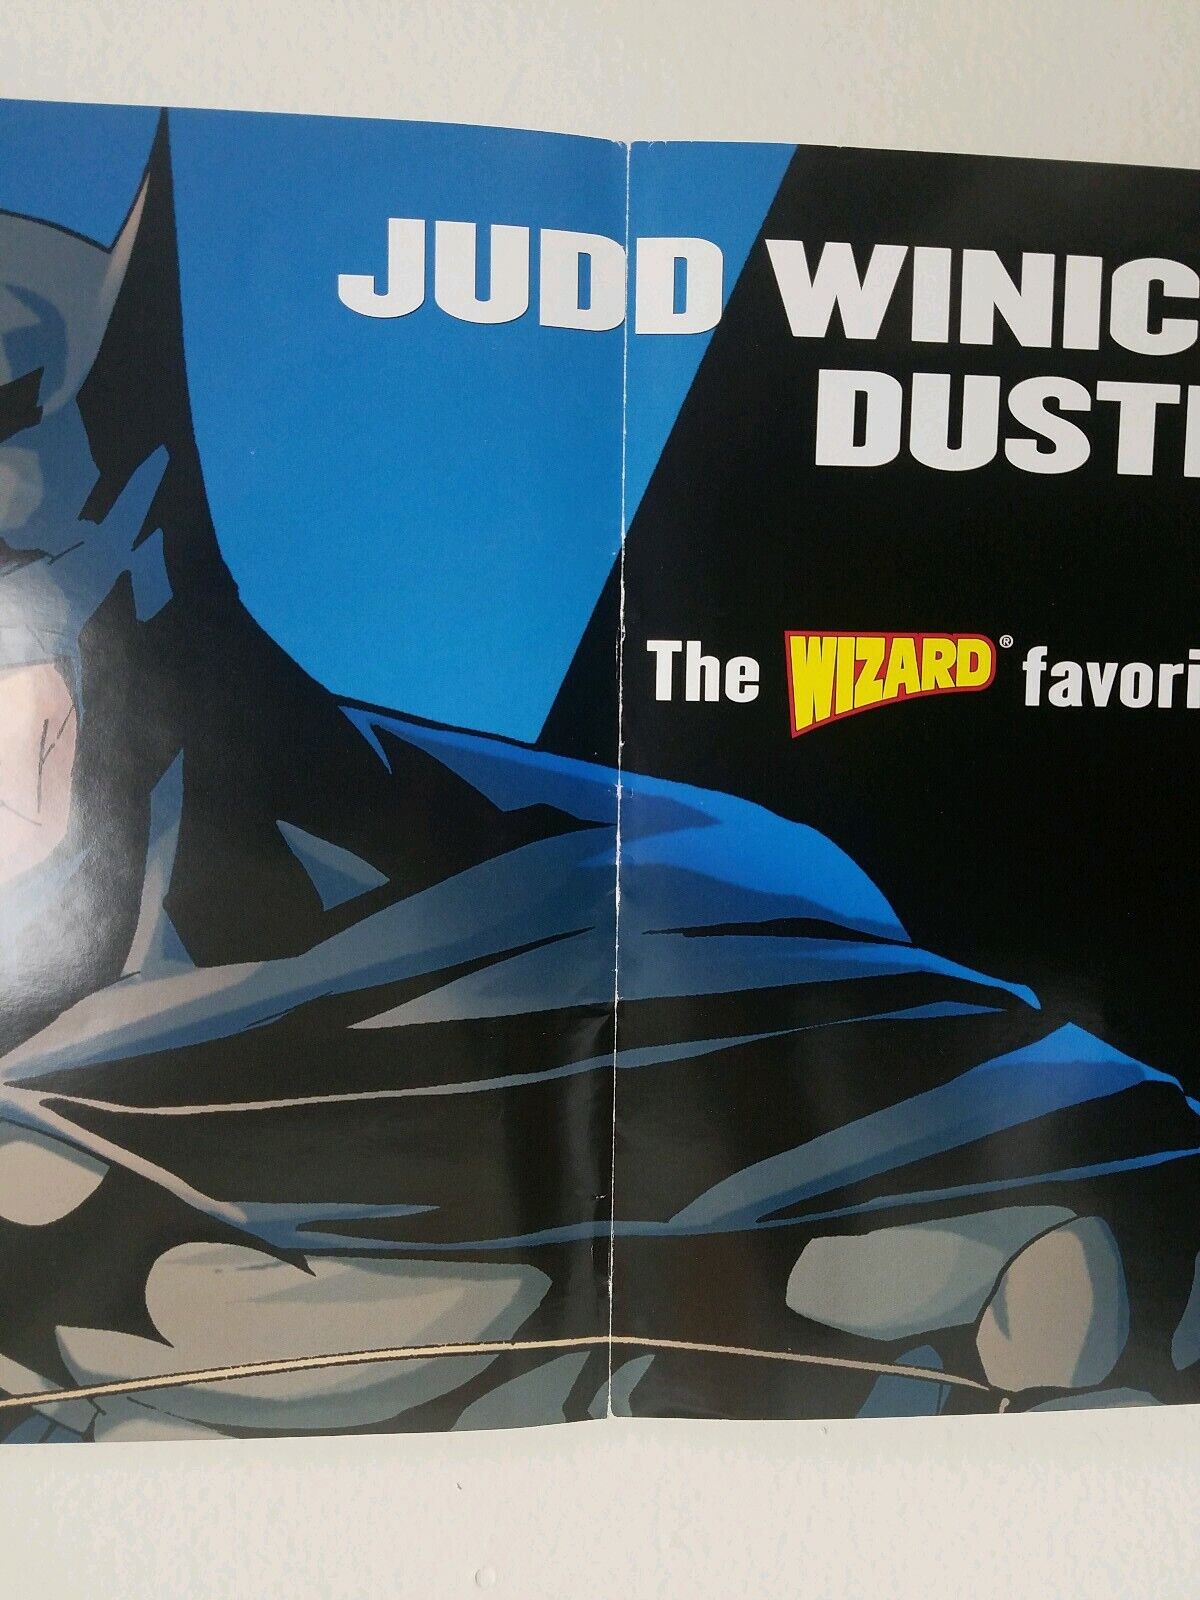 Batman (2004) Retailer Poster For Issue 626 Dustin Nguyen 34 X 11" DC Comics